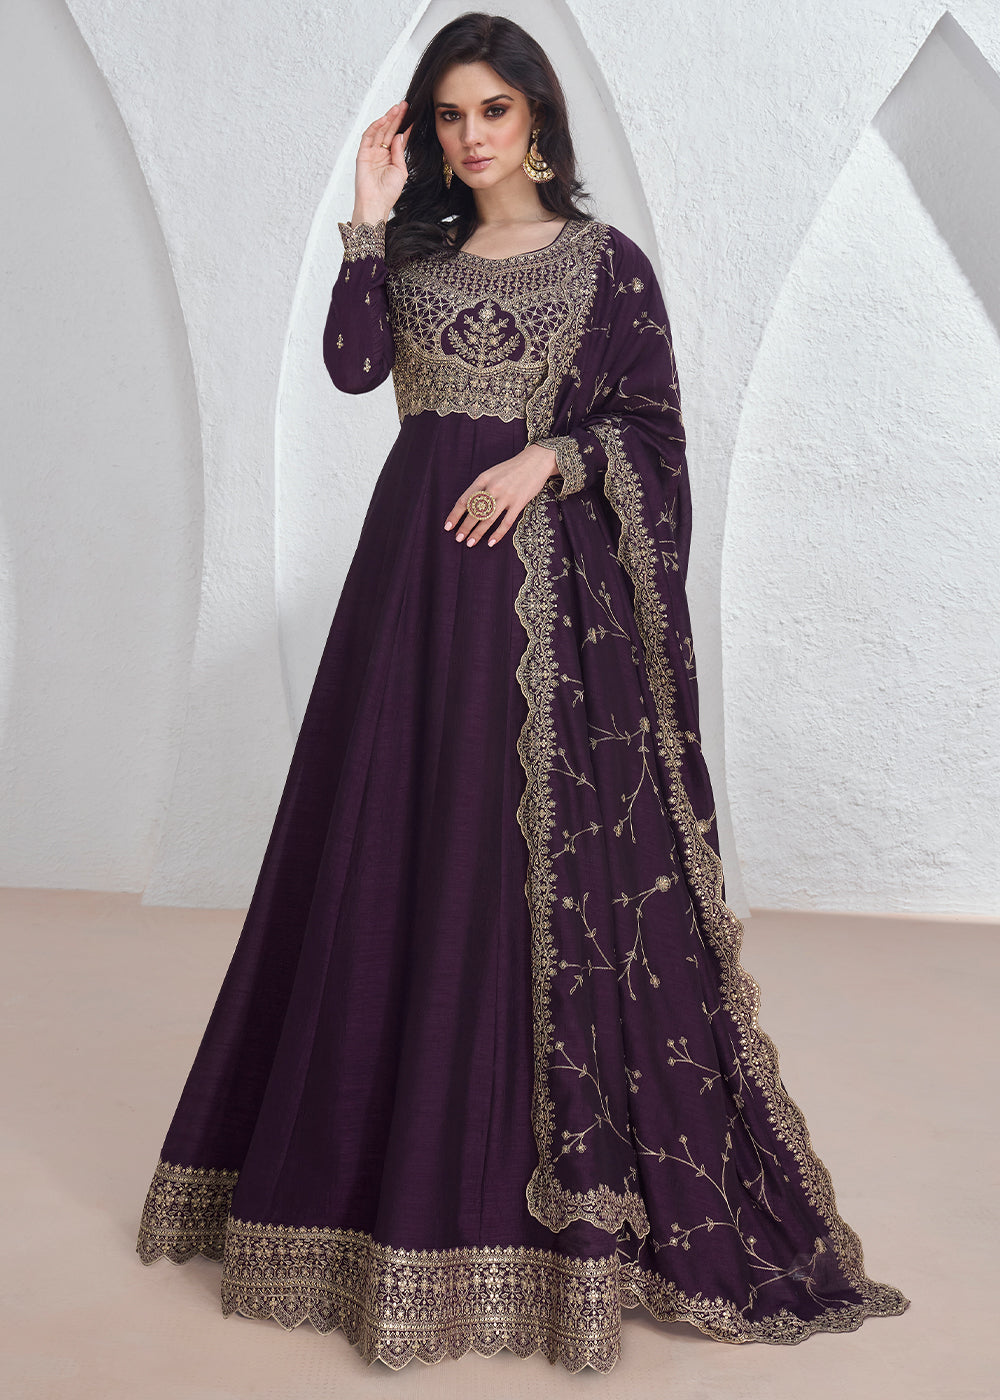 Eggplant Purple Silk Anarkali Suit with Embroidery work